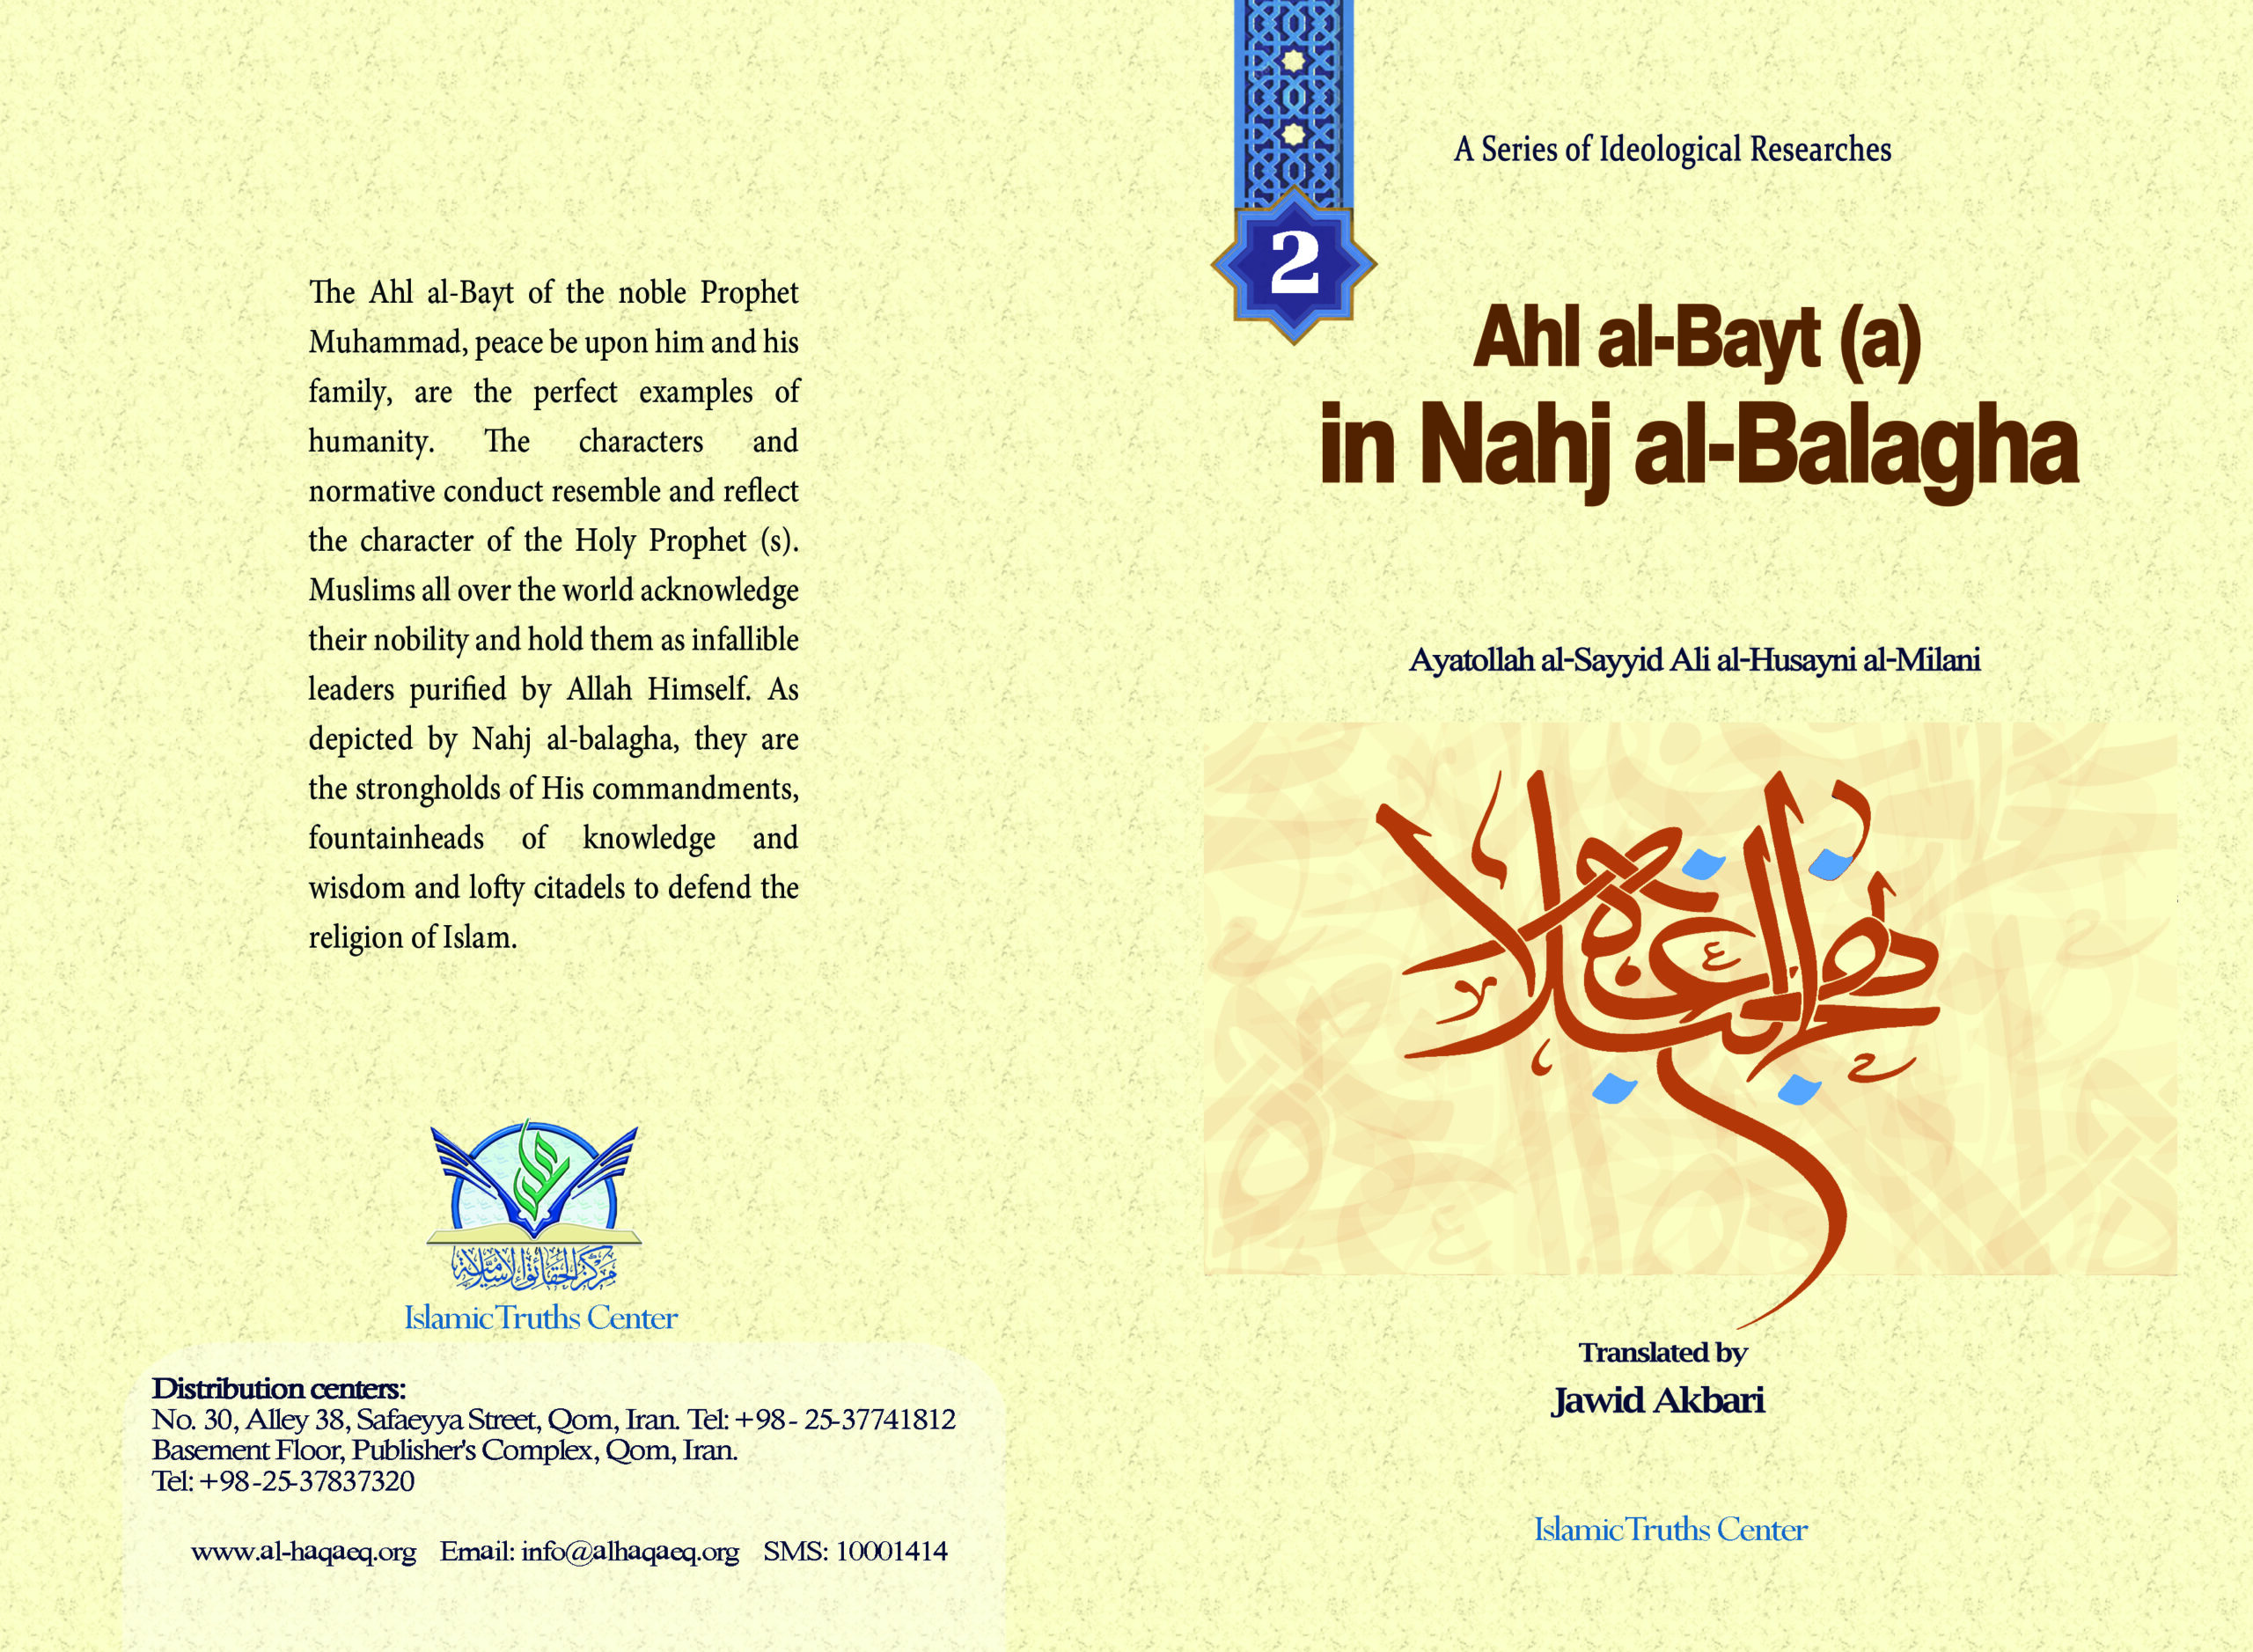 Ahl al-Bayt (a) in Nahj al-Balagha